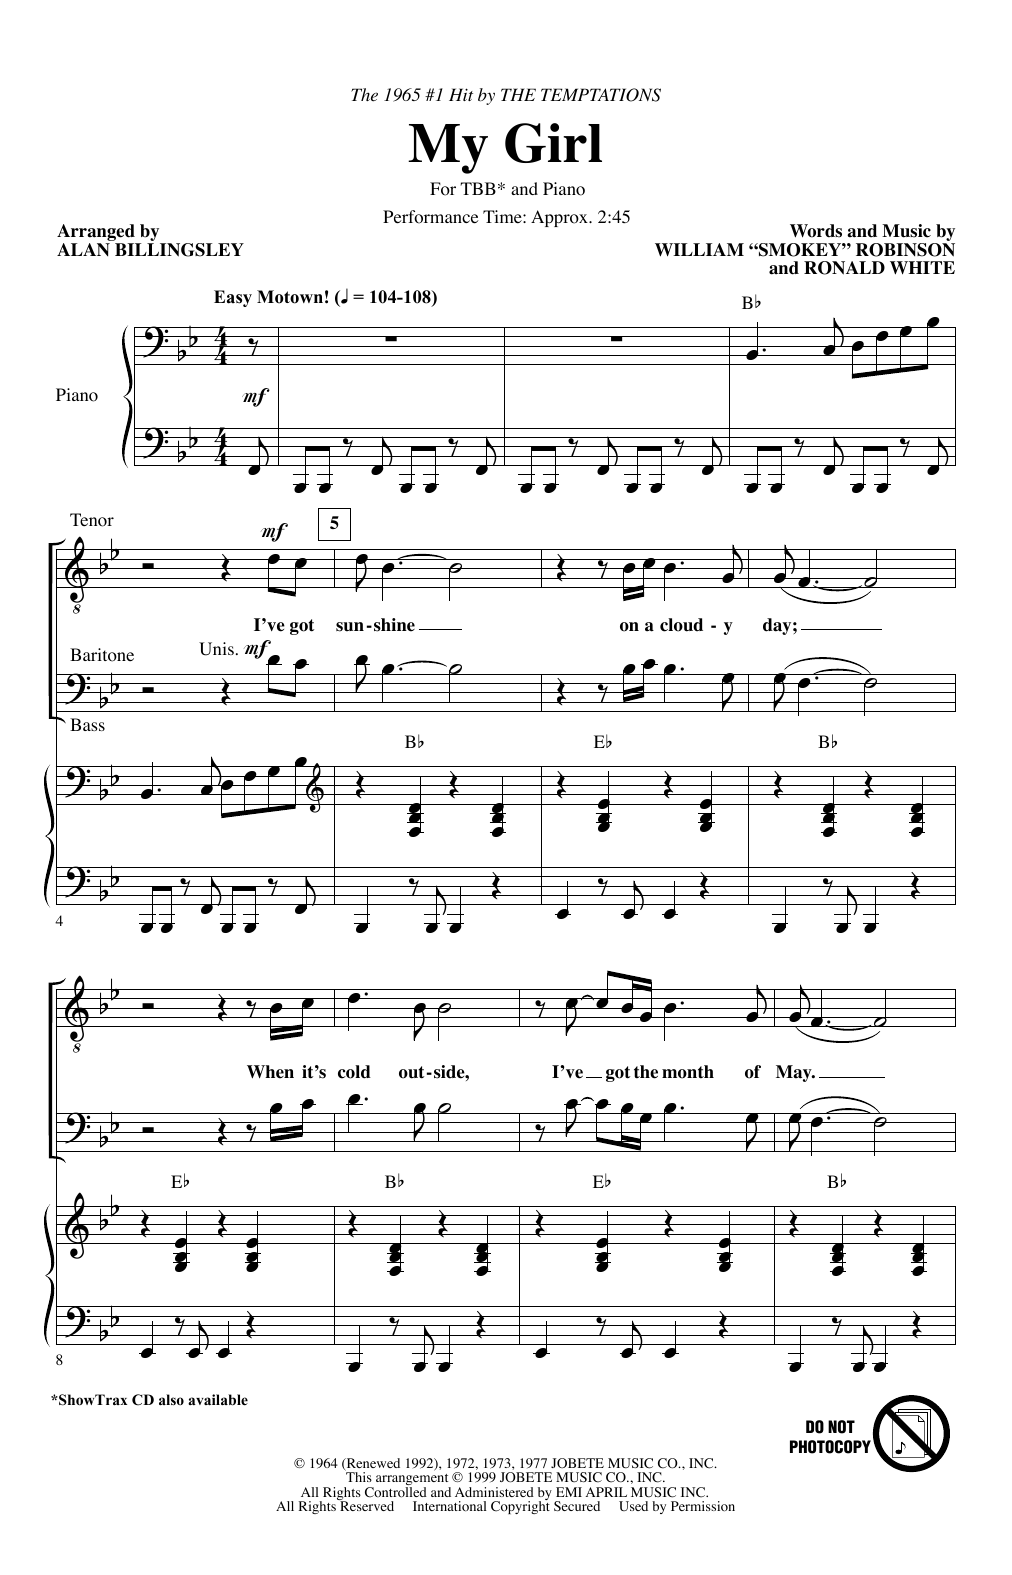 The Temptations My Girl (arr. Alan Billingsley) sheet music notes and chords arranged for TTBB Choir